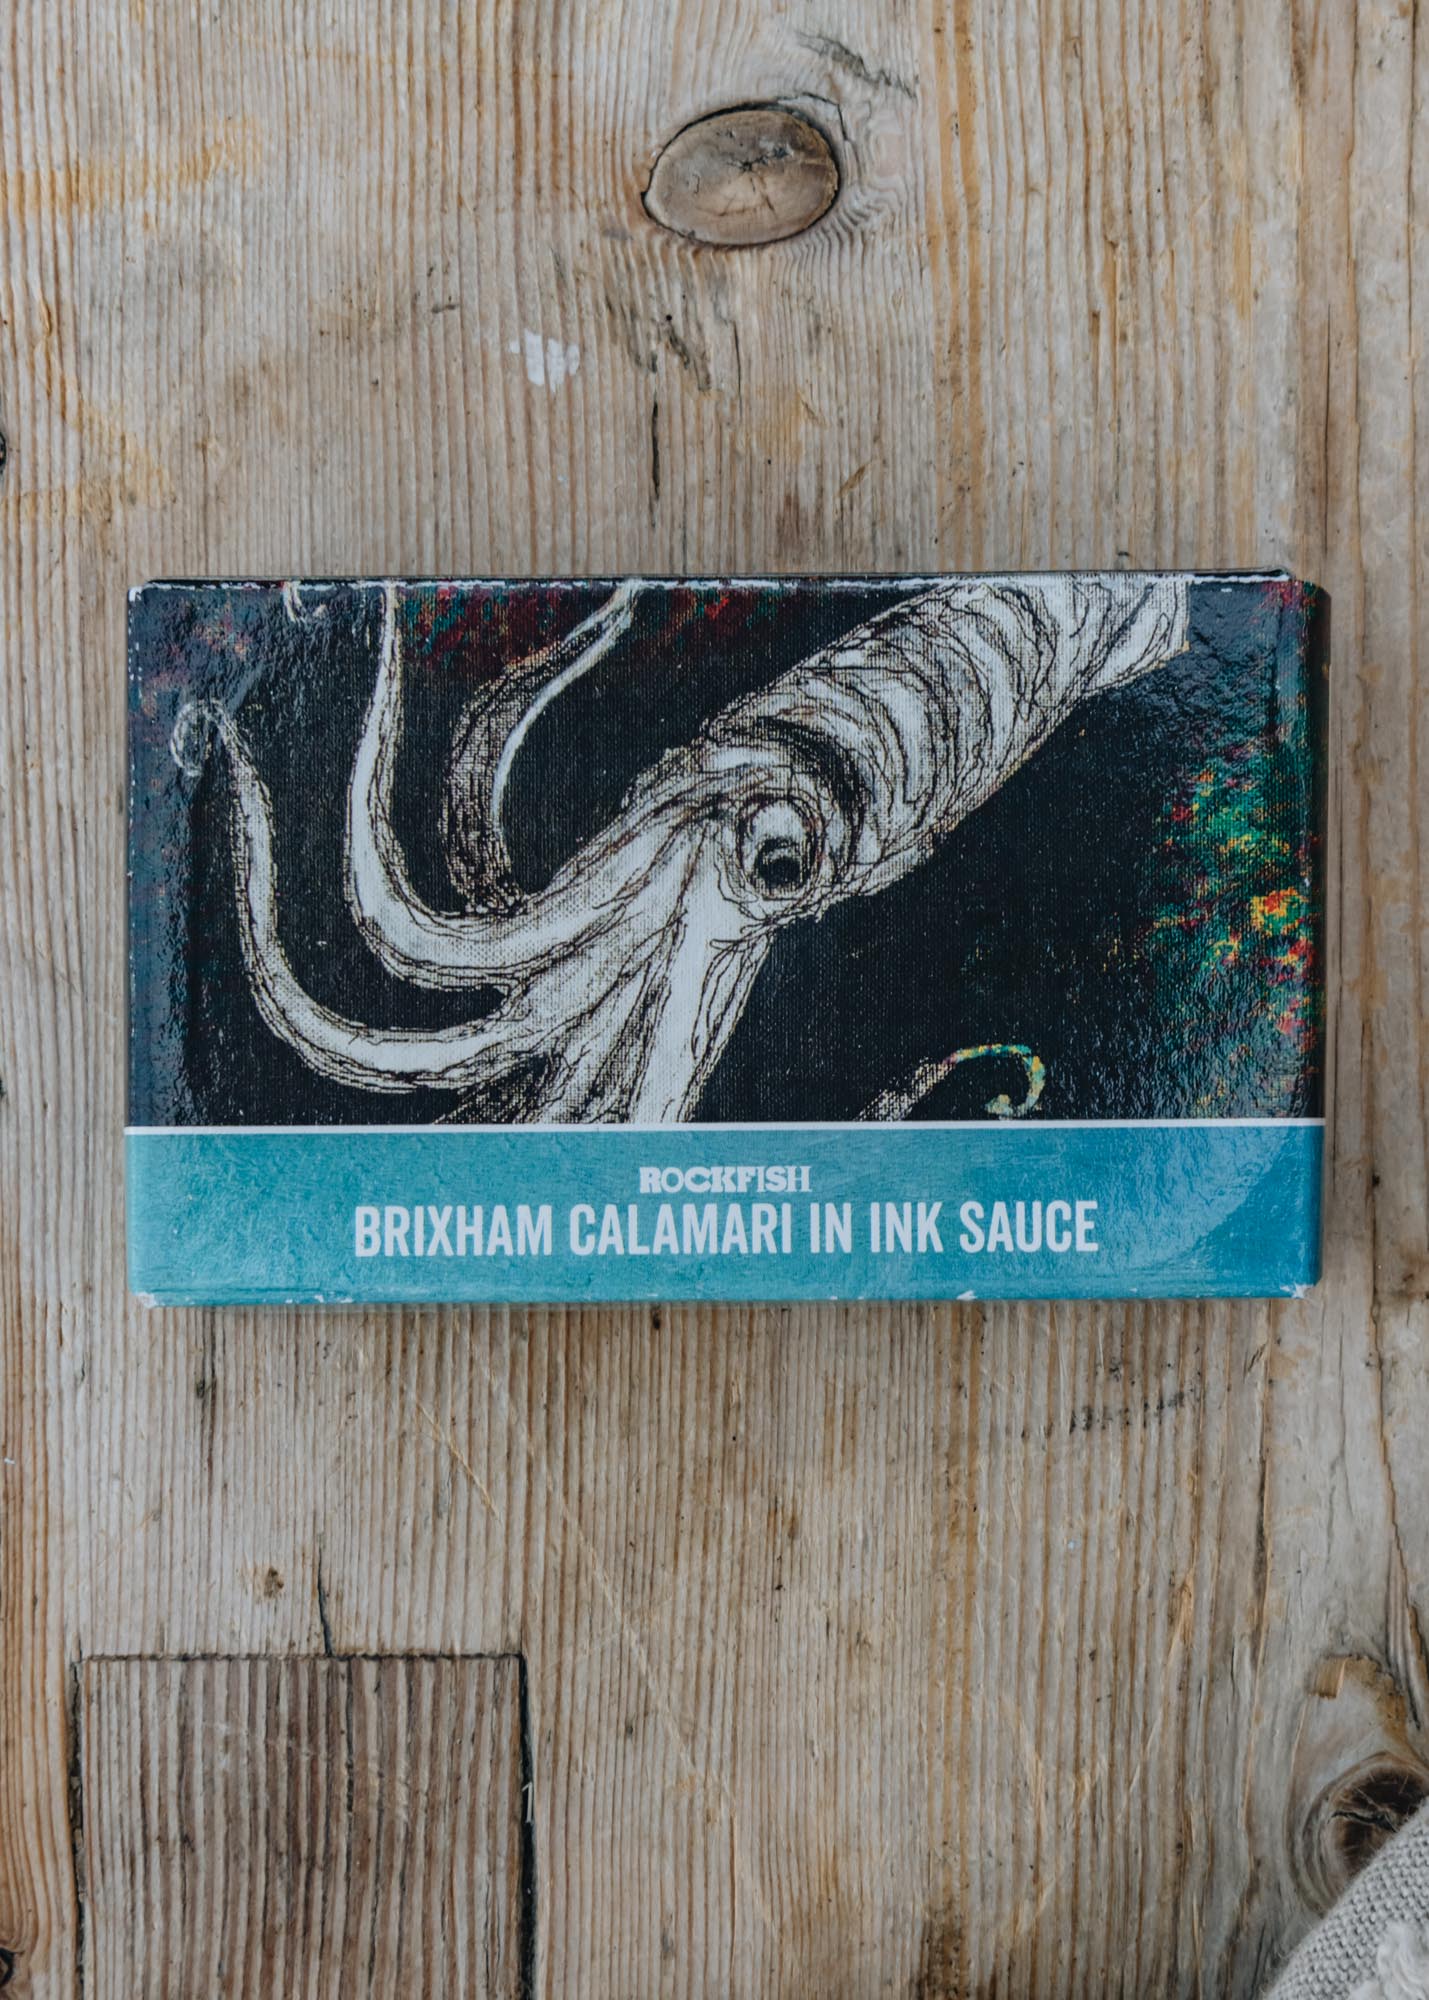 Rockfish Brixham Calamari in Ink Sauce